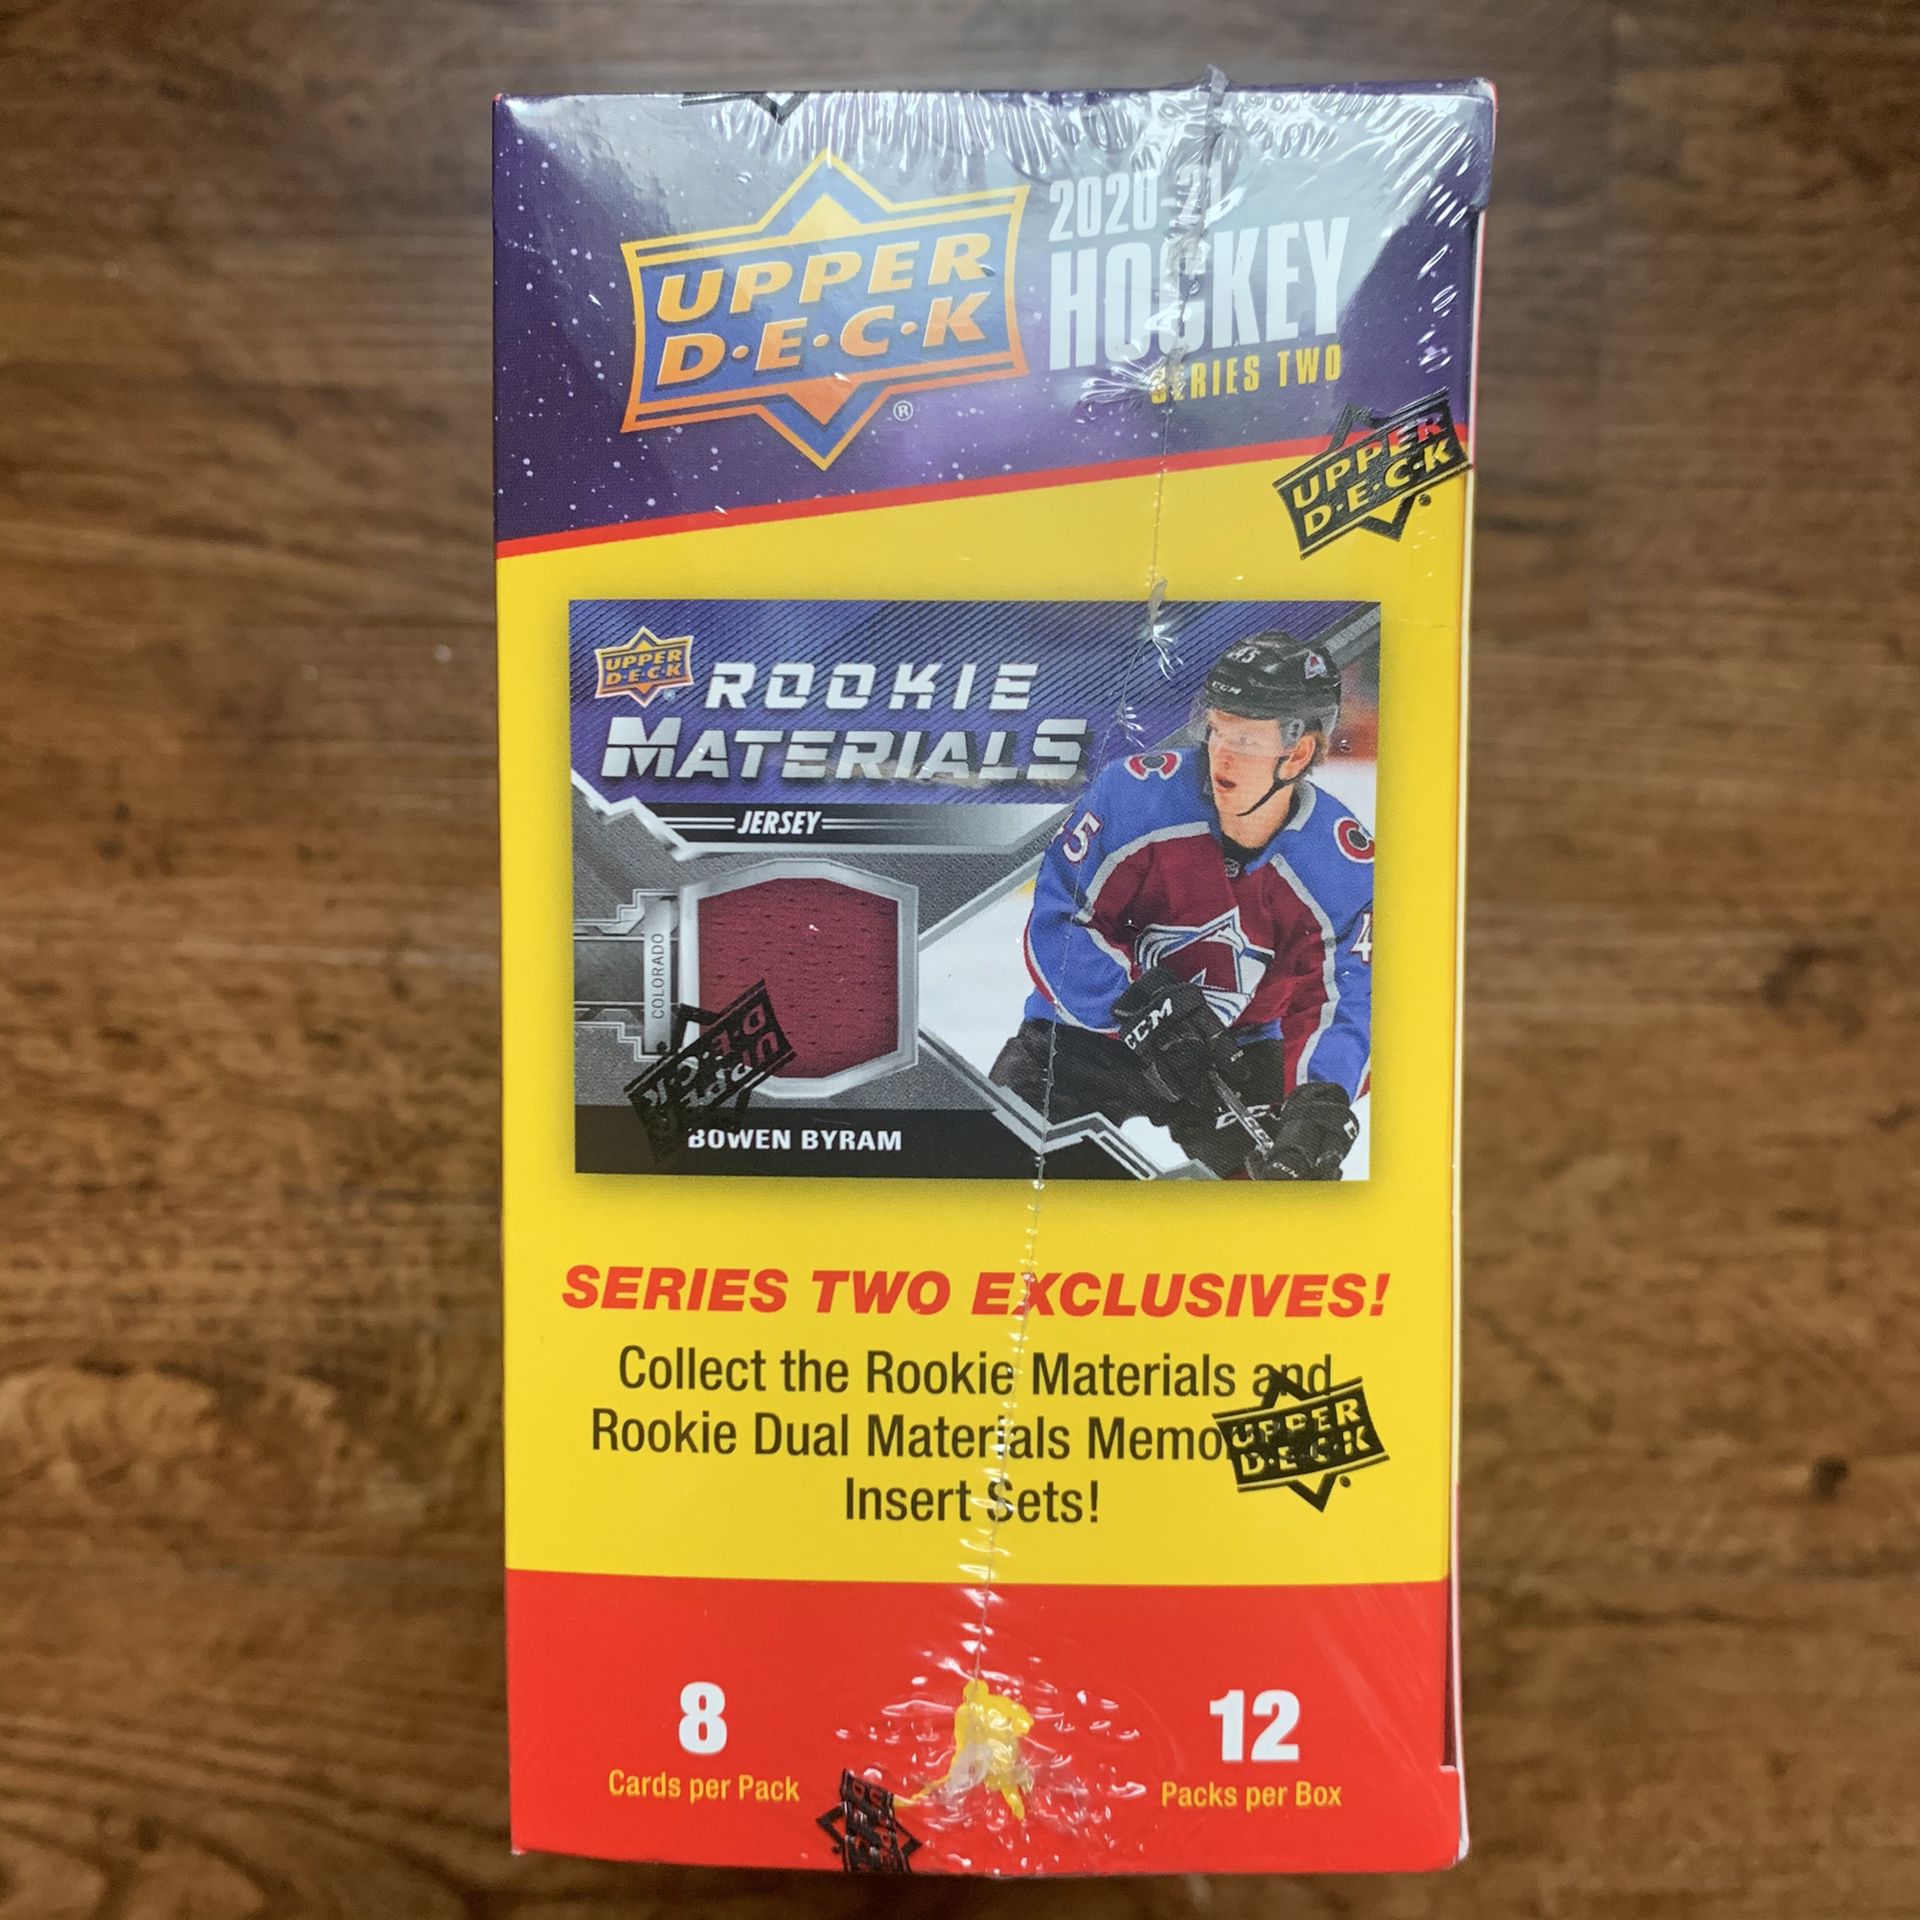 2020-2021 Upper Deck Hockey Series 2 MEGA BOX  Series 2 MEGA BOX YOUNG GUNS  This hockey mega box has 12 packs with 8 cards per regular pack and 1 exc